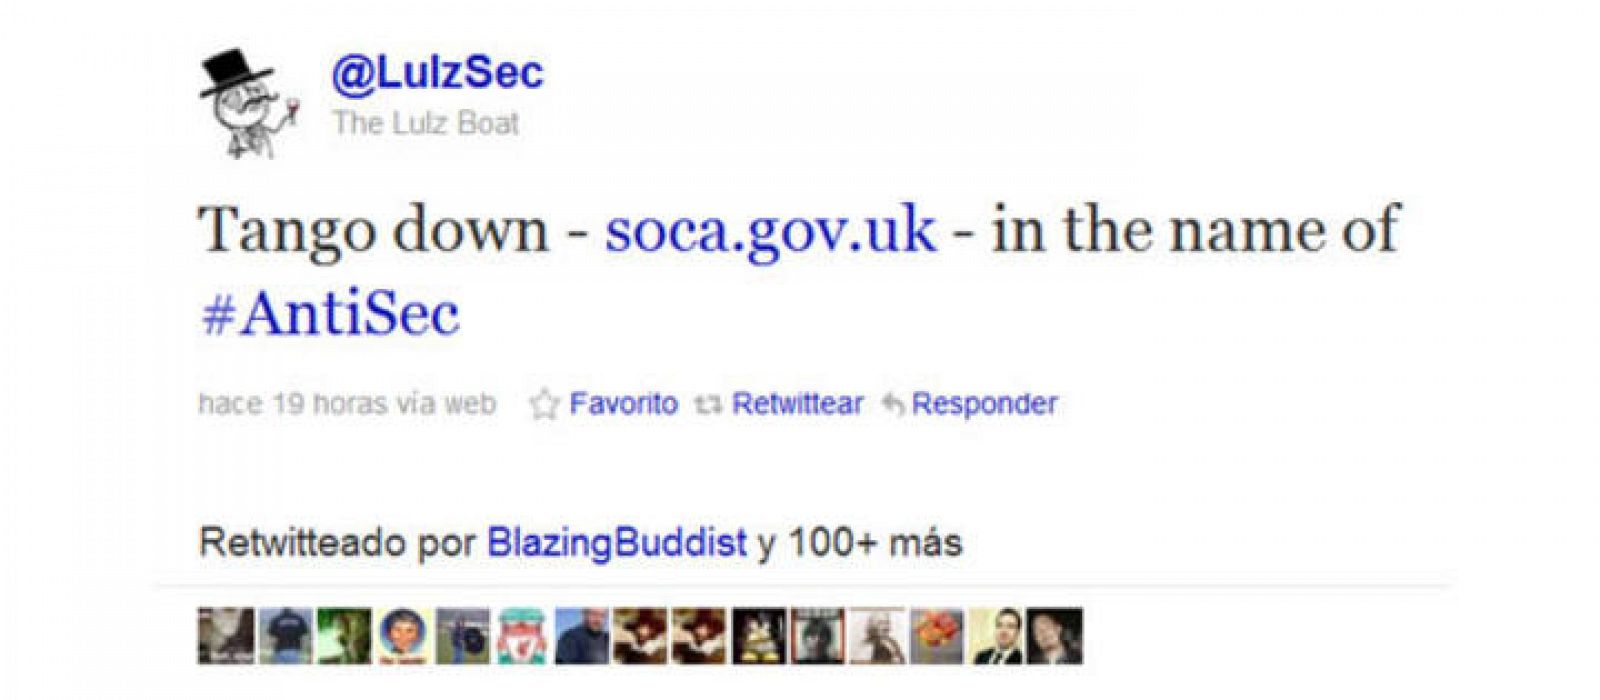 Lulzsec confirmaba en Twitter el ciberataque contra la web de la SOCA